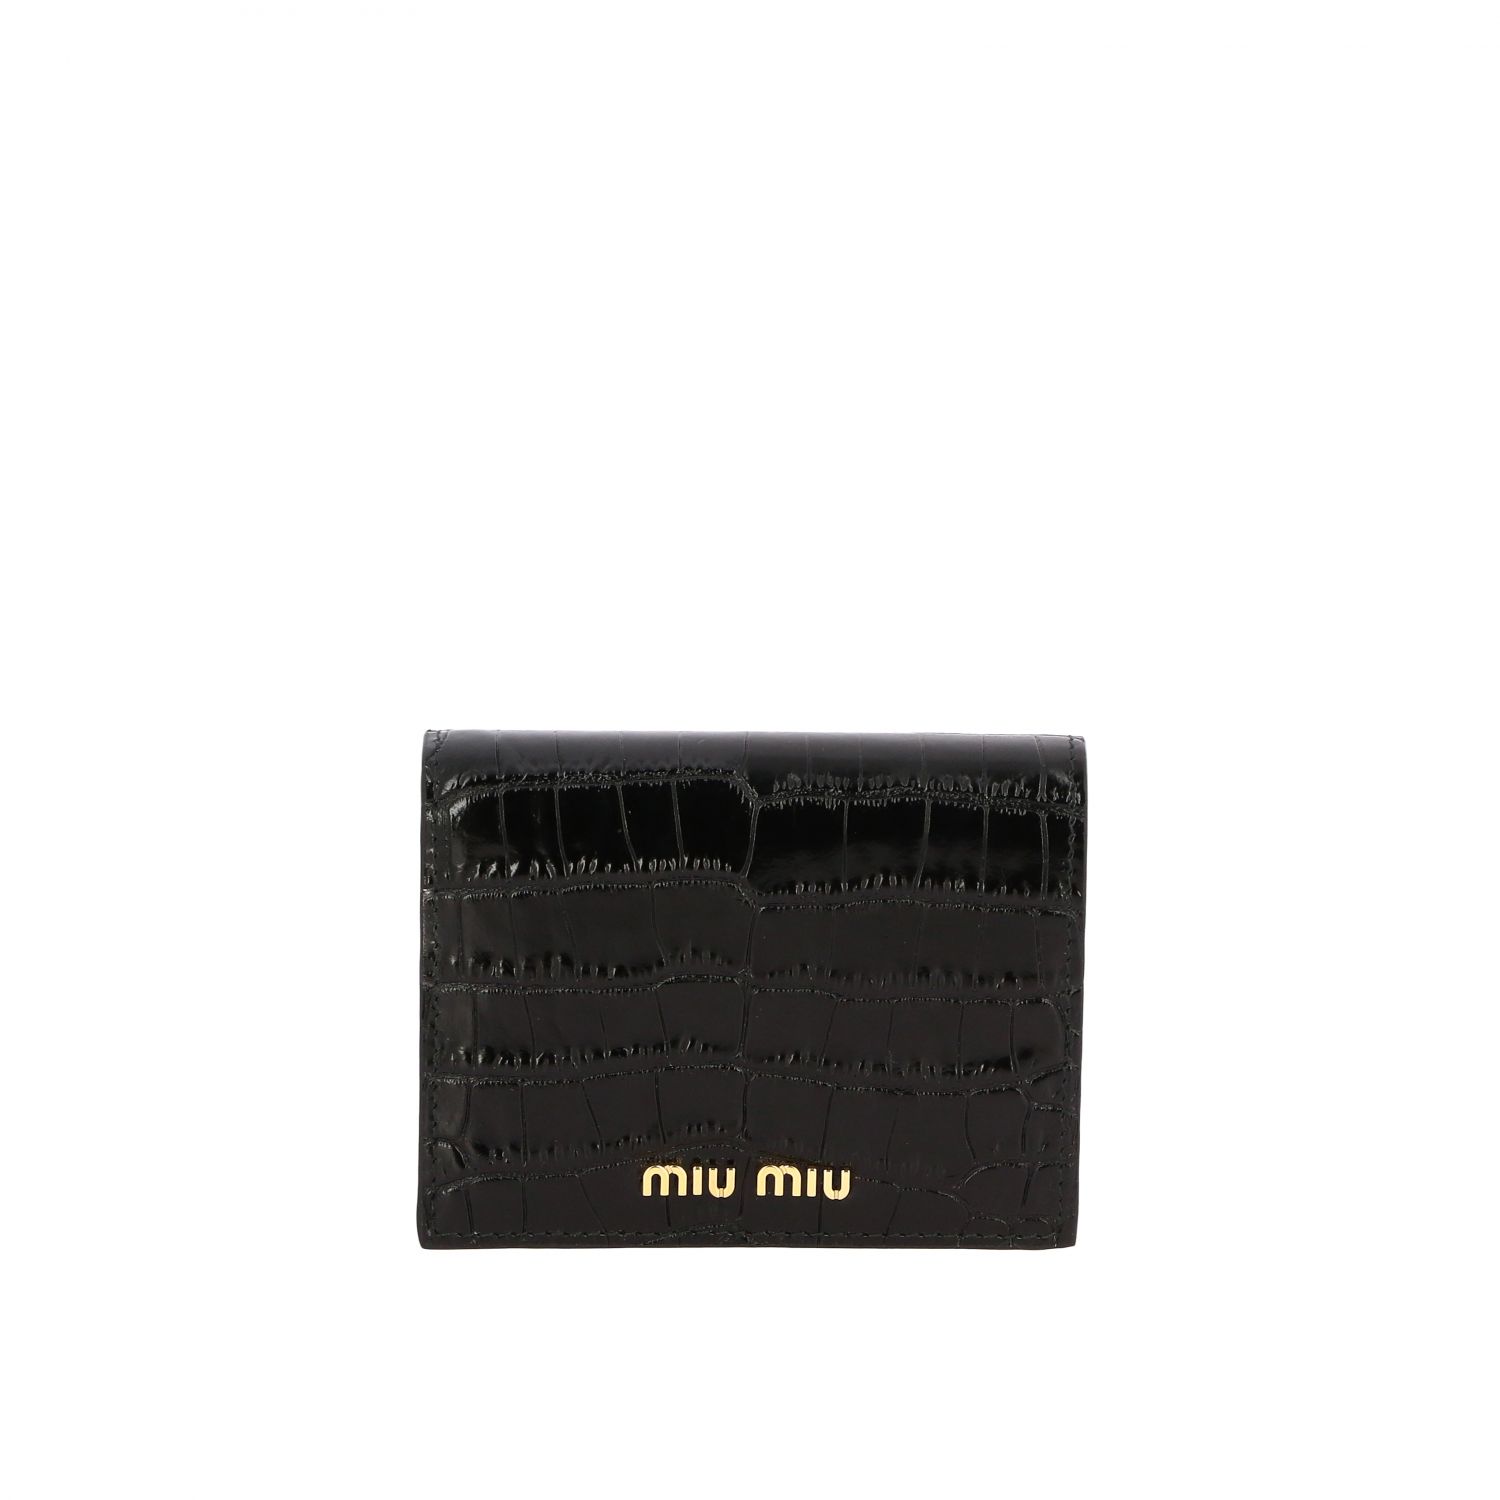 Geldbeutel Miu Miu: Kleines Miu Miu Portemonnaie aus Leder mit Kroko Druck schwarz 1